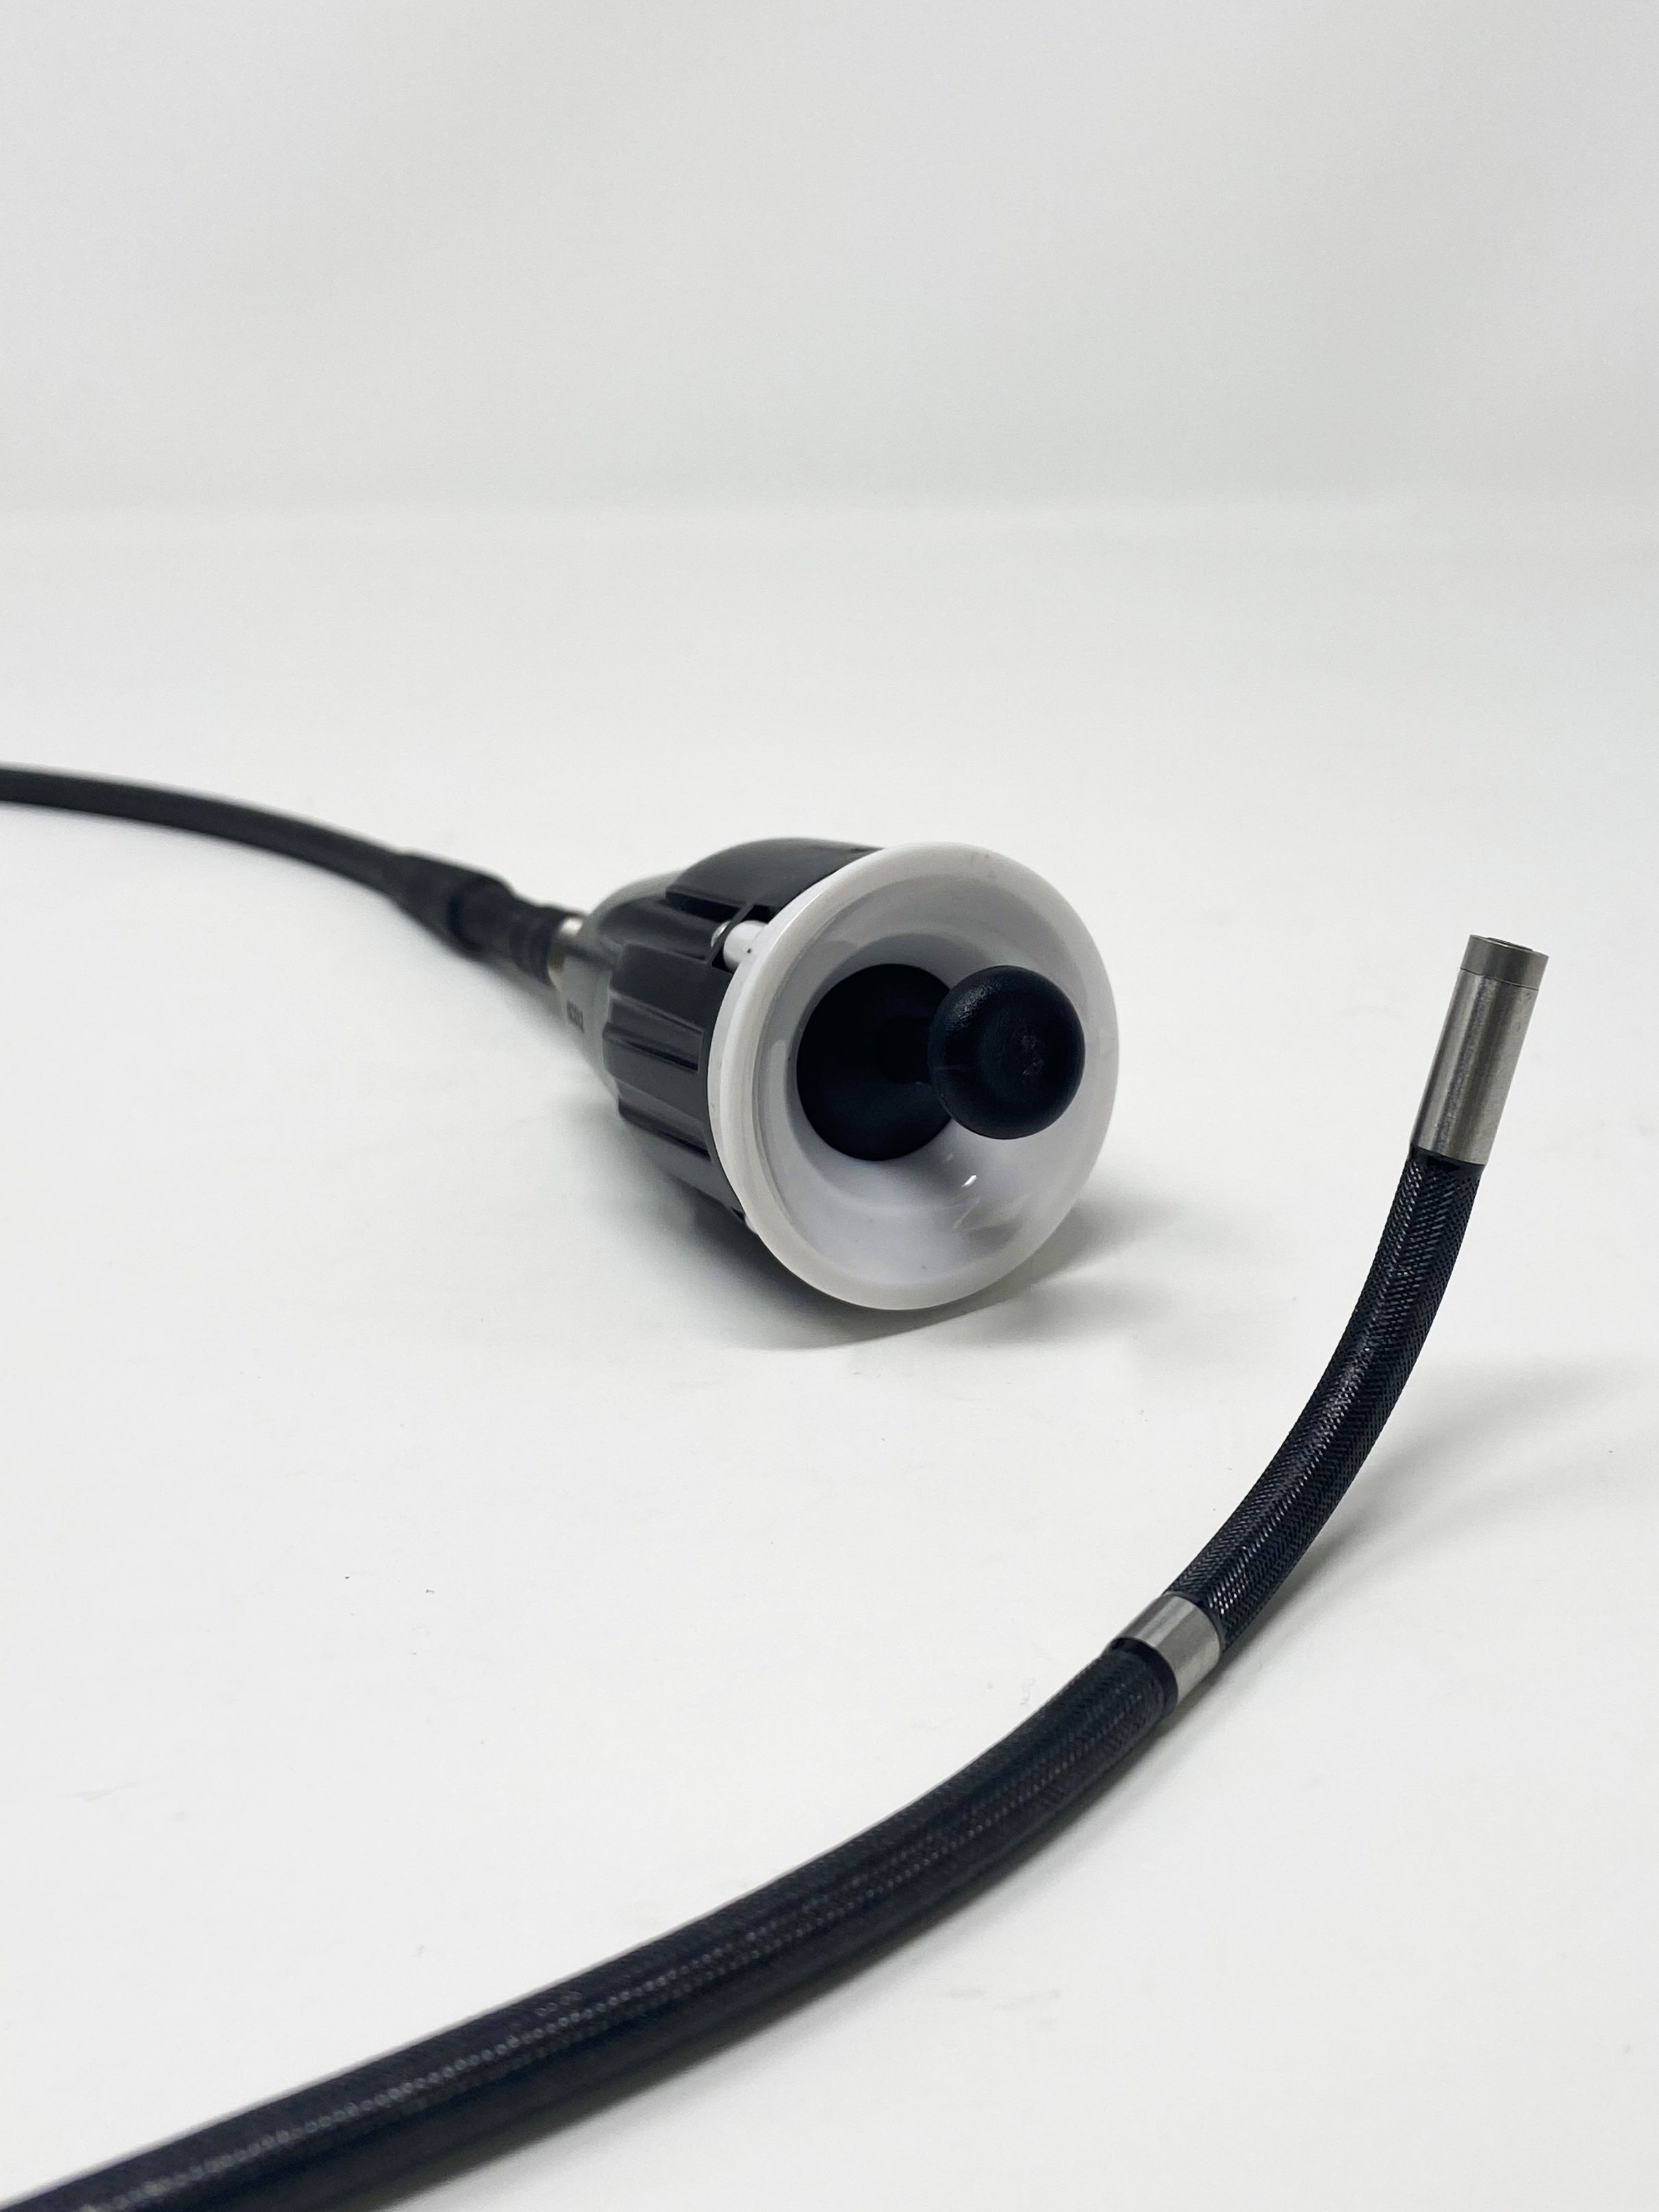 Laserliner 6mm probe Inspection Camera, 1m Probe Length, 960 x 720pixels Resolution, LED Illumination